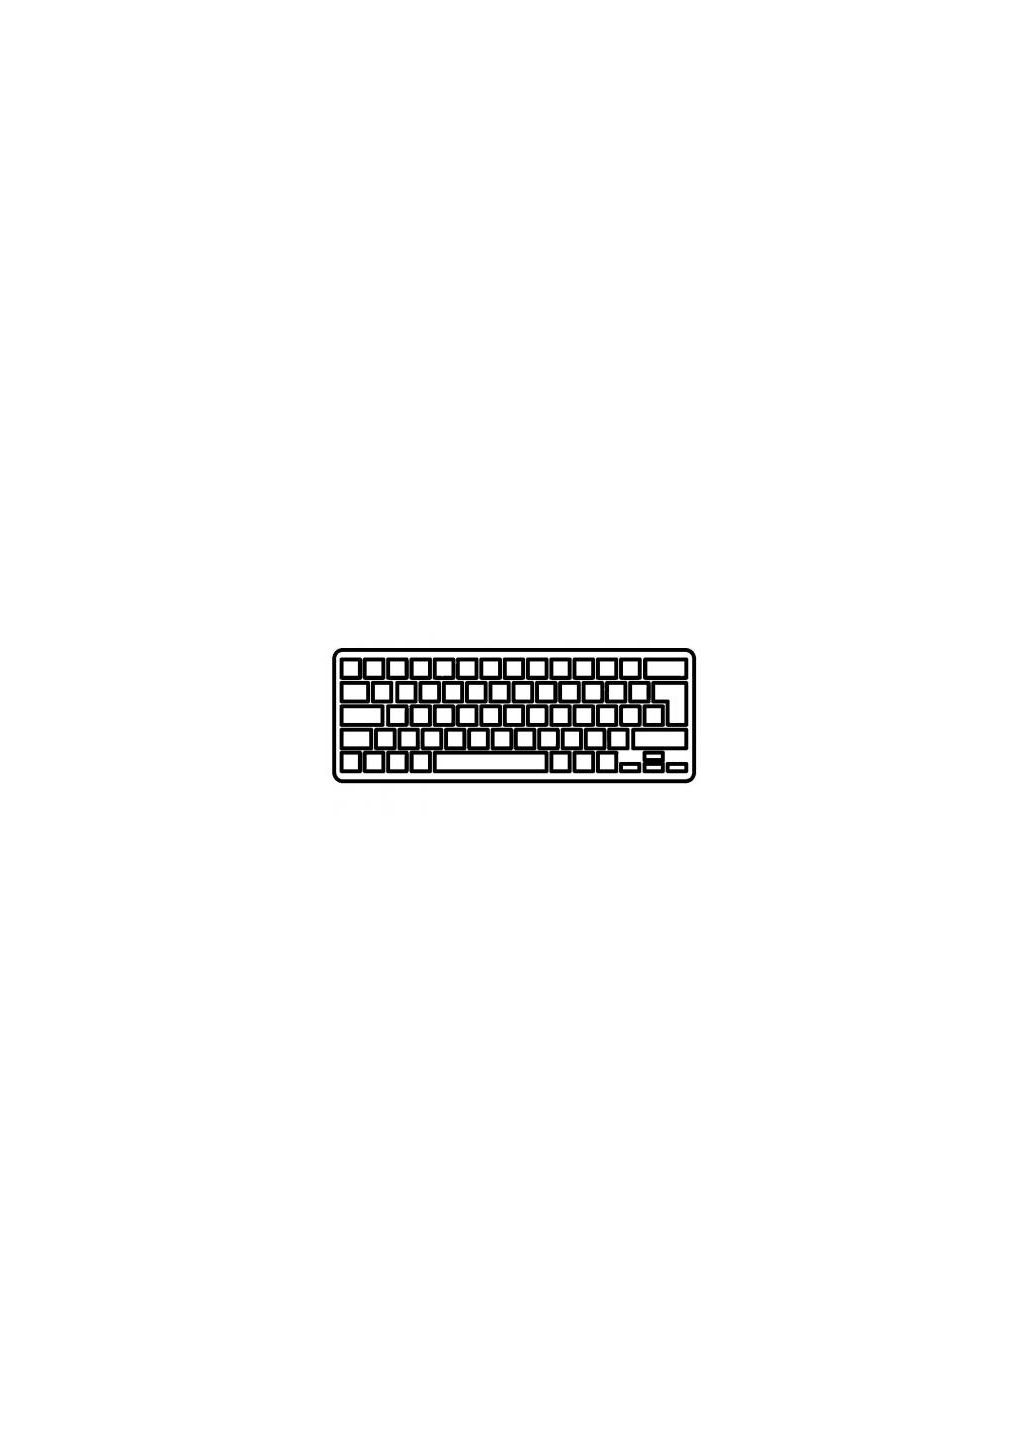 Клавиатура ноутбука (A43319) Dell vostro 1710/1720 series черная ua (276708058)